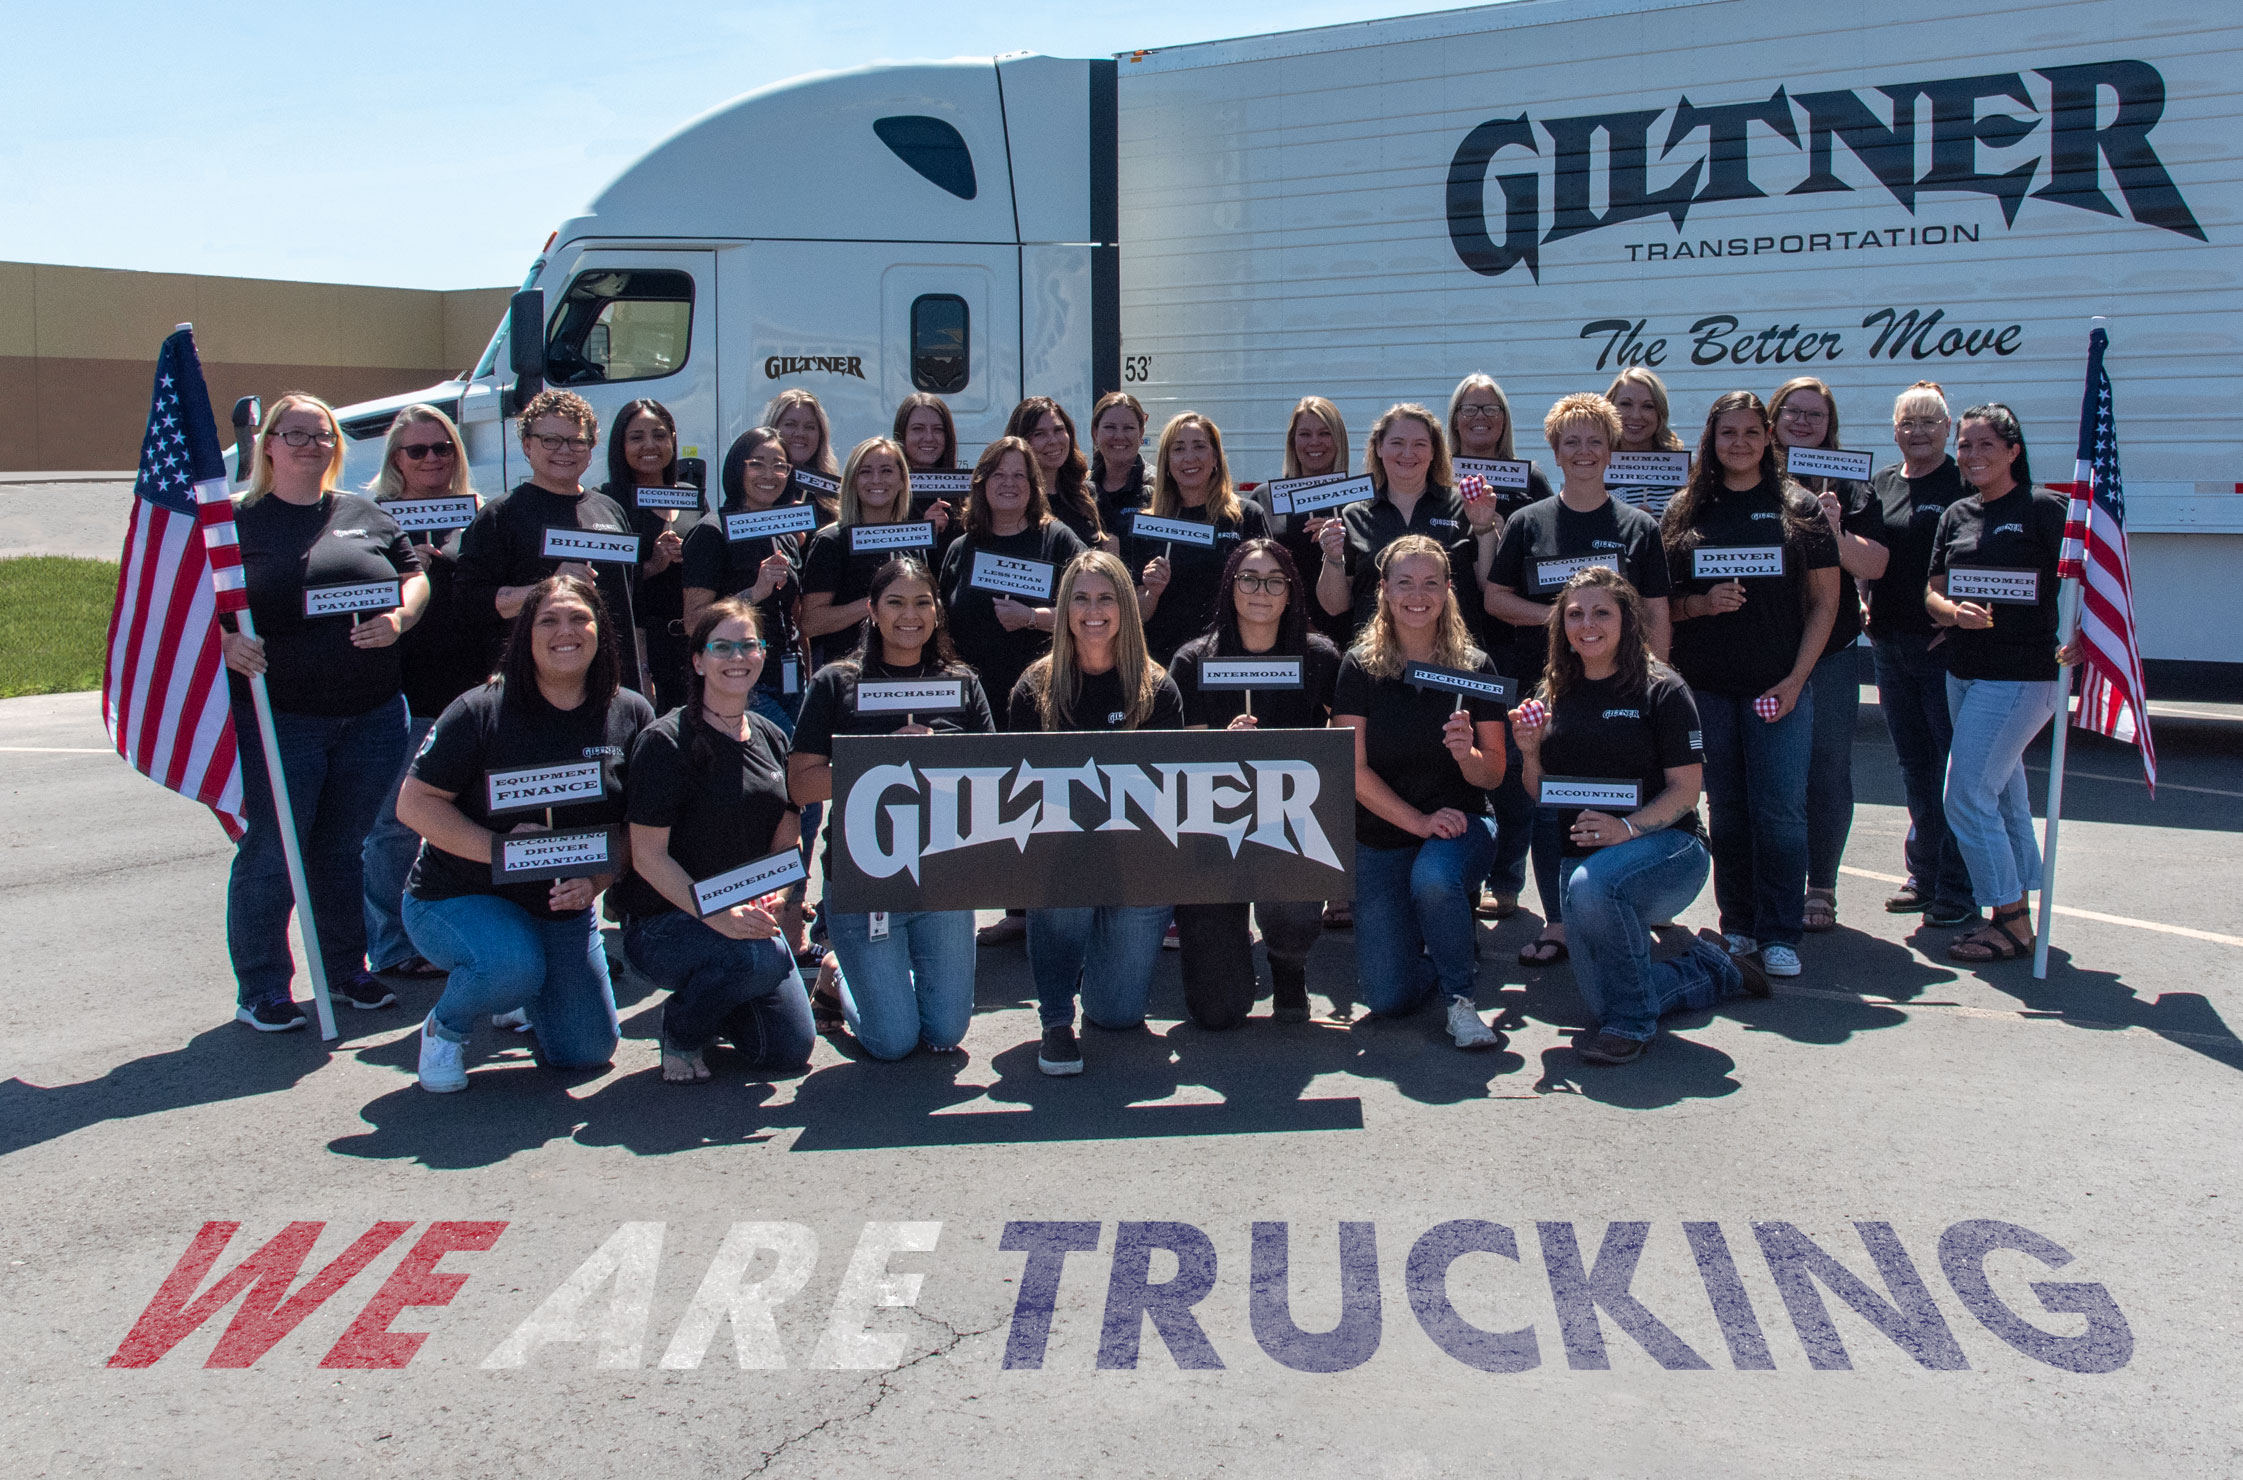 2022-Photo-Contest-WE-are-trucking-Giltner-Transportation-We-Keep-America-Moving